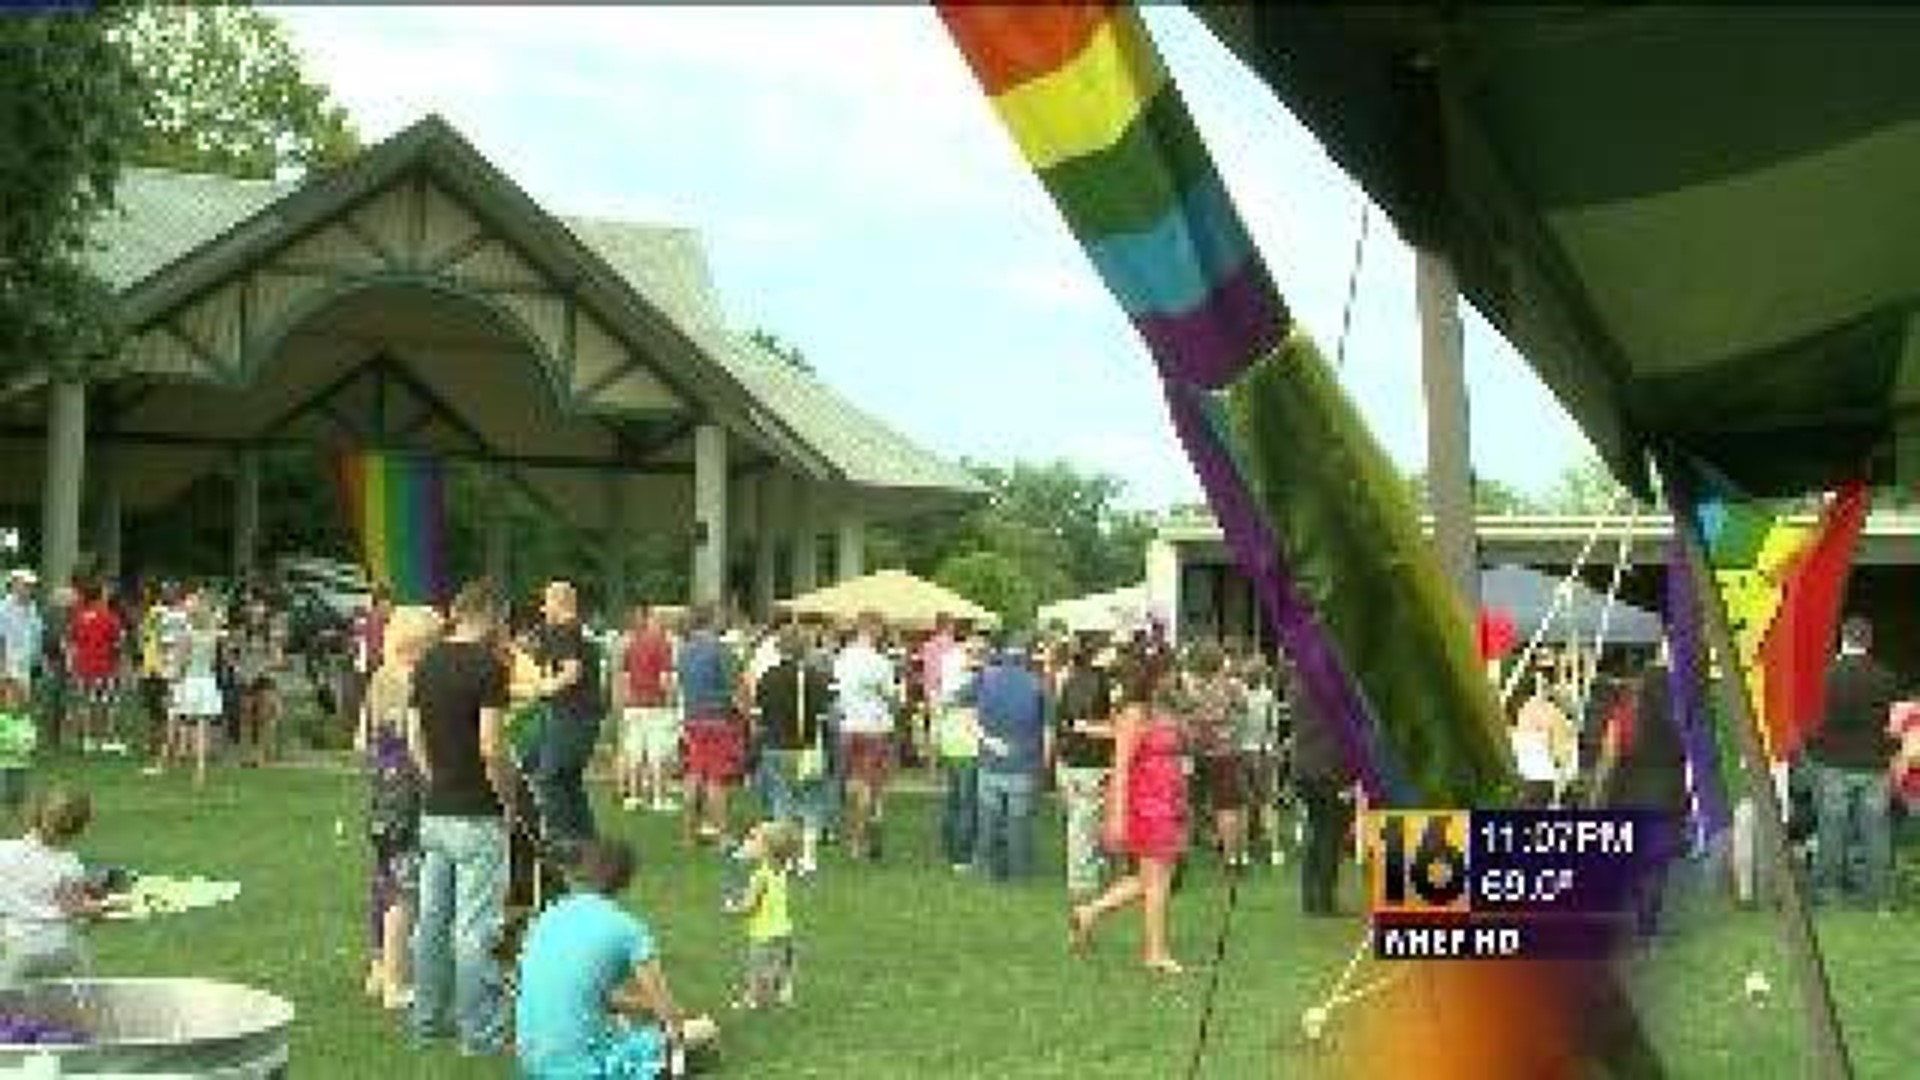 Pridefest Celebrated in Wilkes-Barre